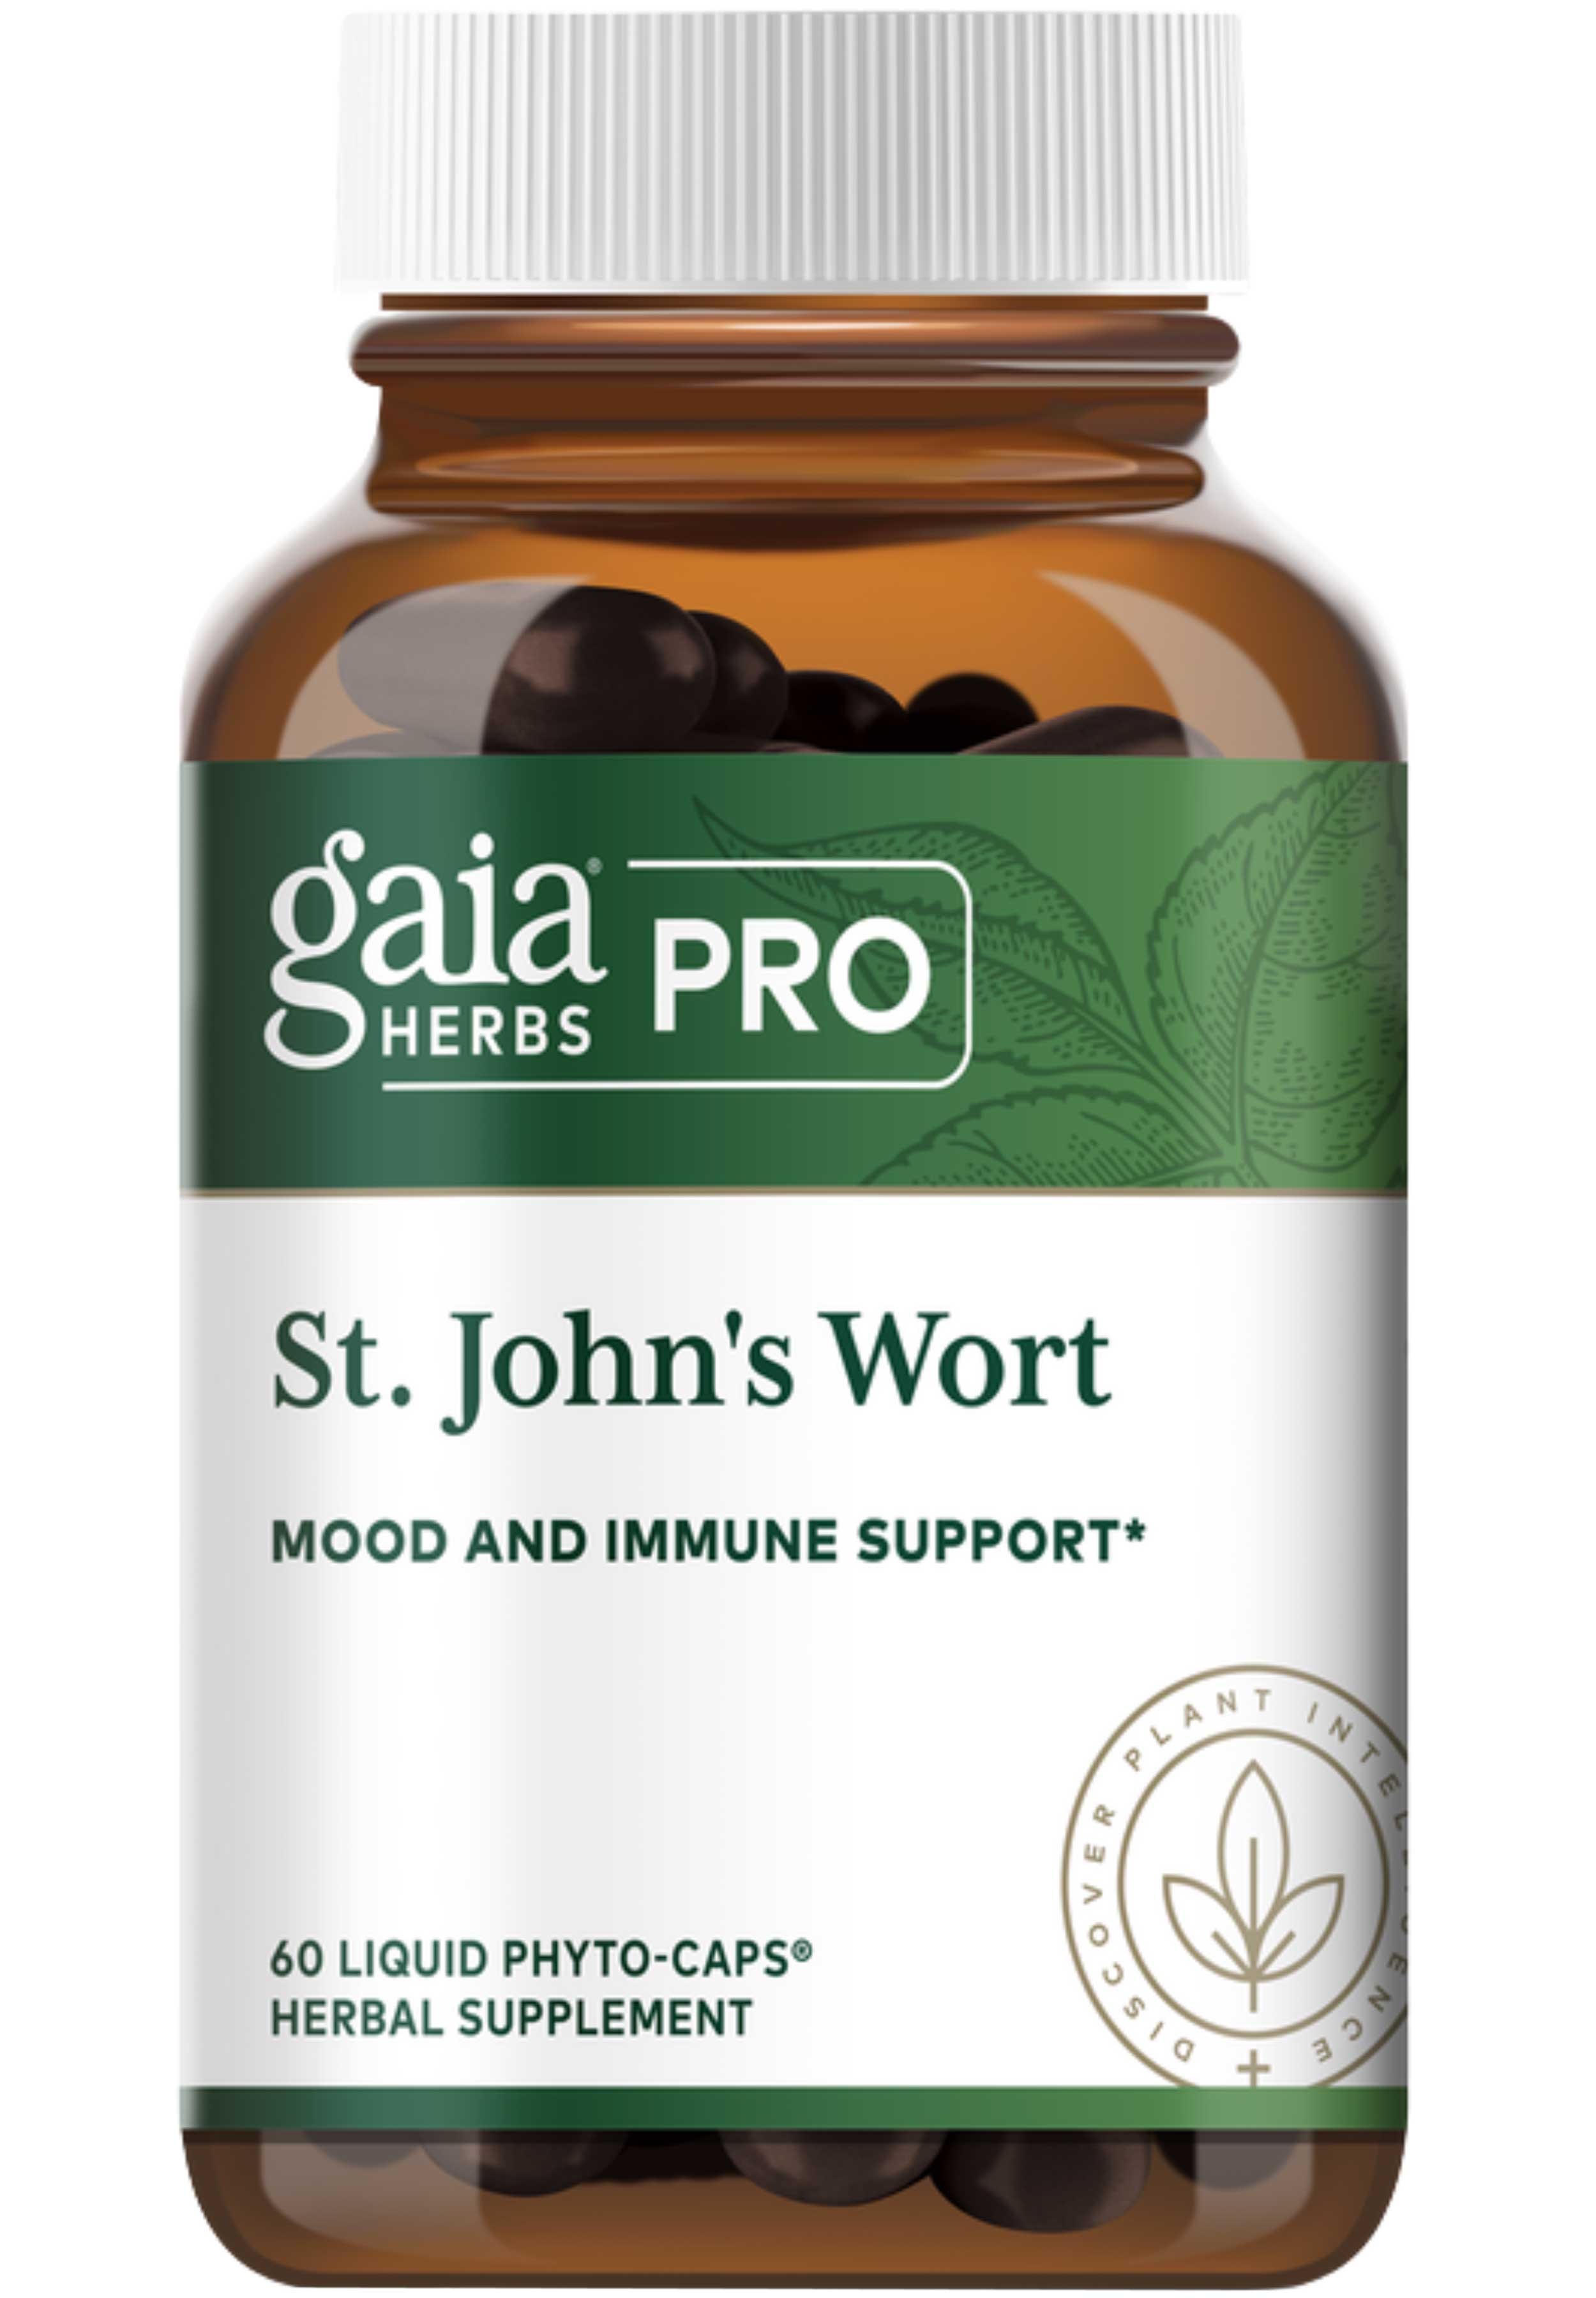 Gaia Herbs Professional Solutions St. John's Wort